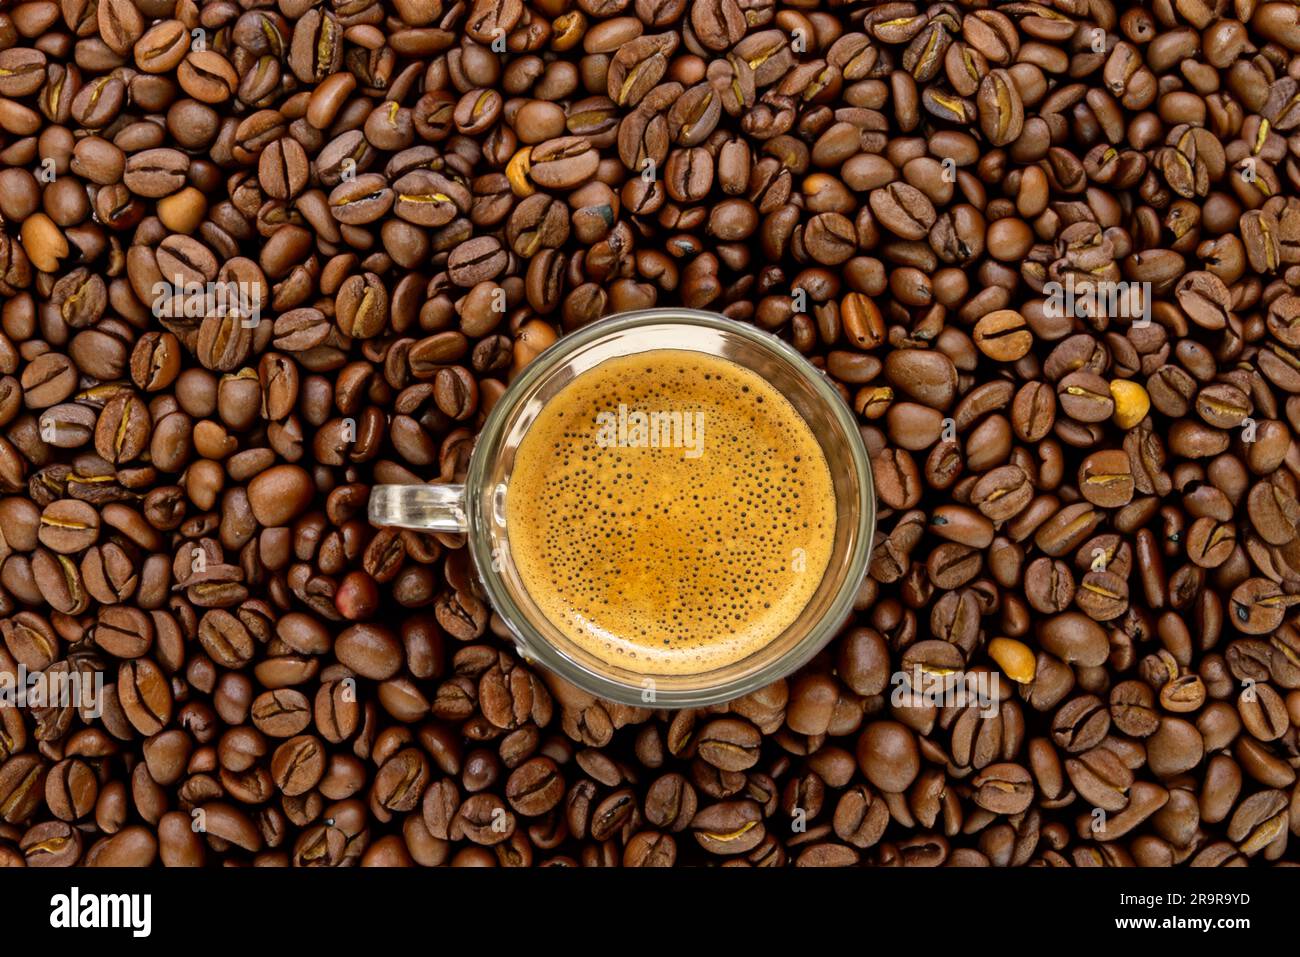 https://c8.alamy.com/comp/2R9R9YD/espresso-surrounded-with-coffee-beans-2R9R9YD.jpg